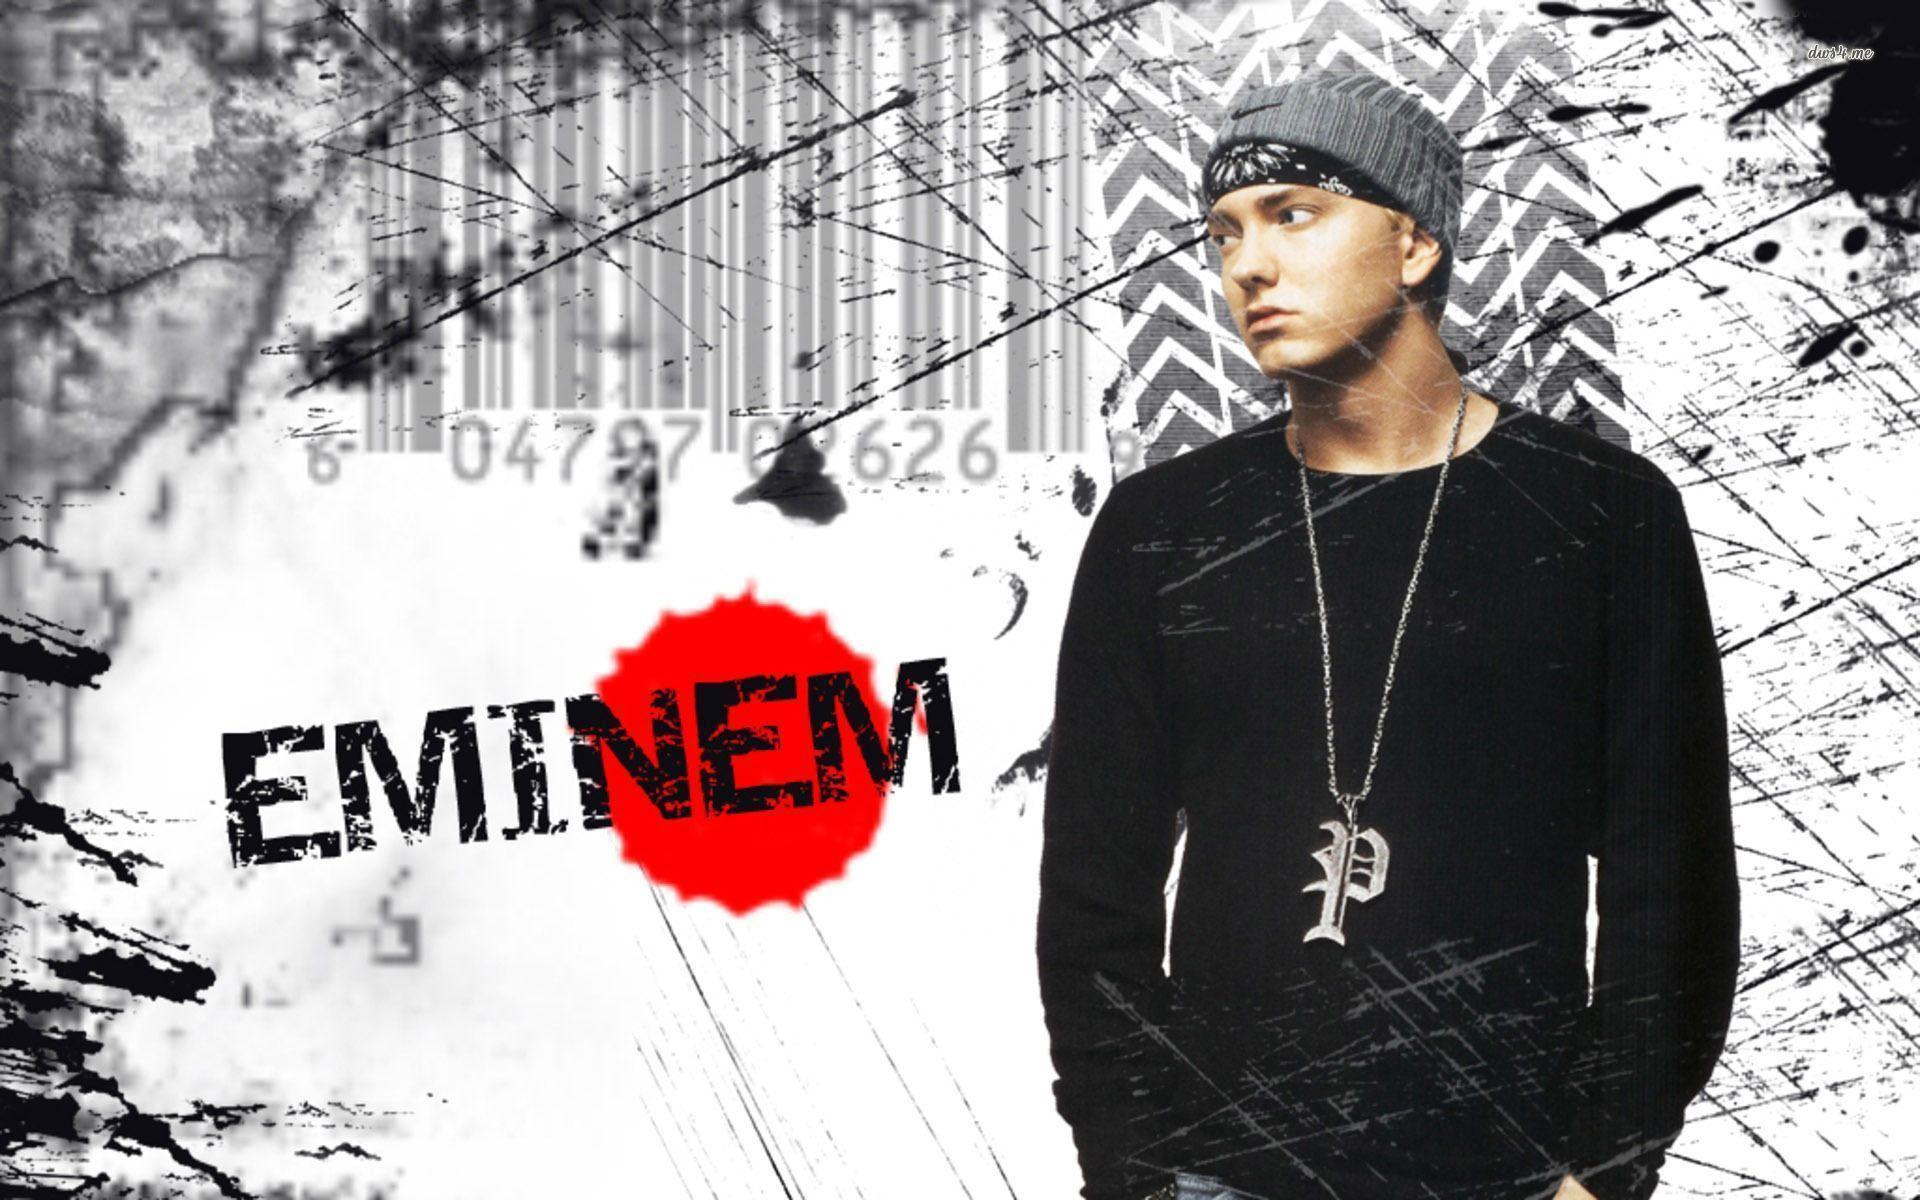 Eminem Wallpaper 4 amazing image 25337 HD Wallpaper. Wallroro